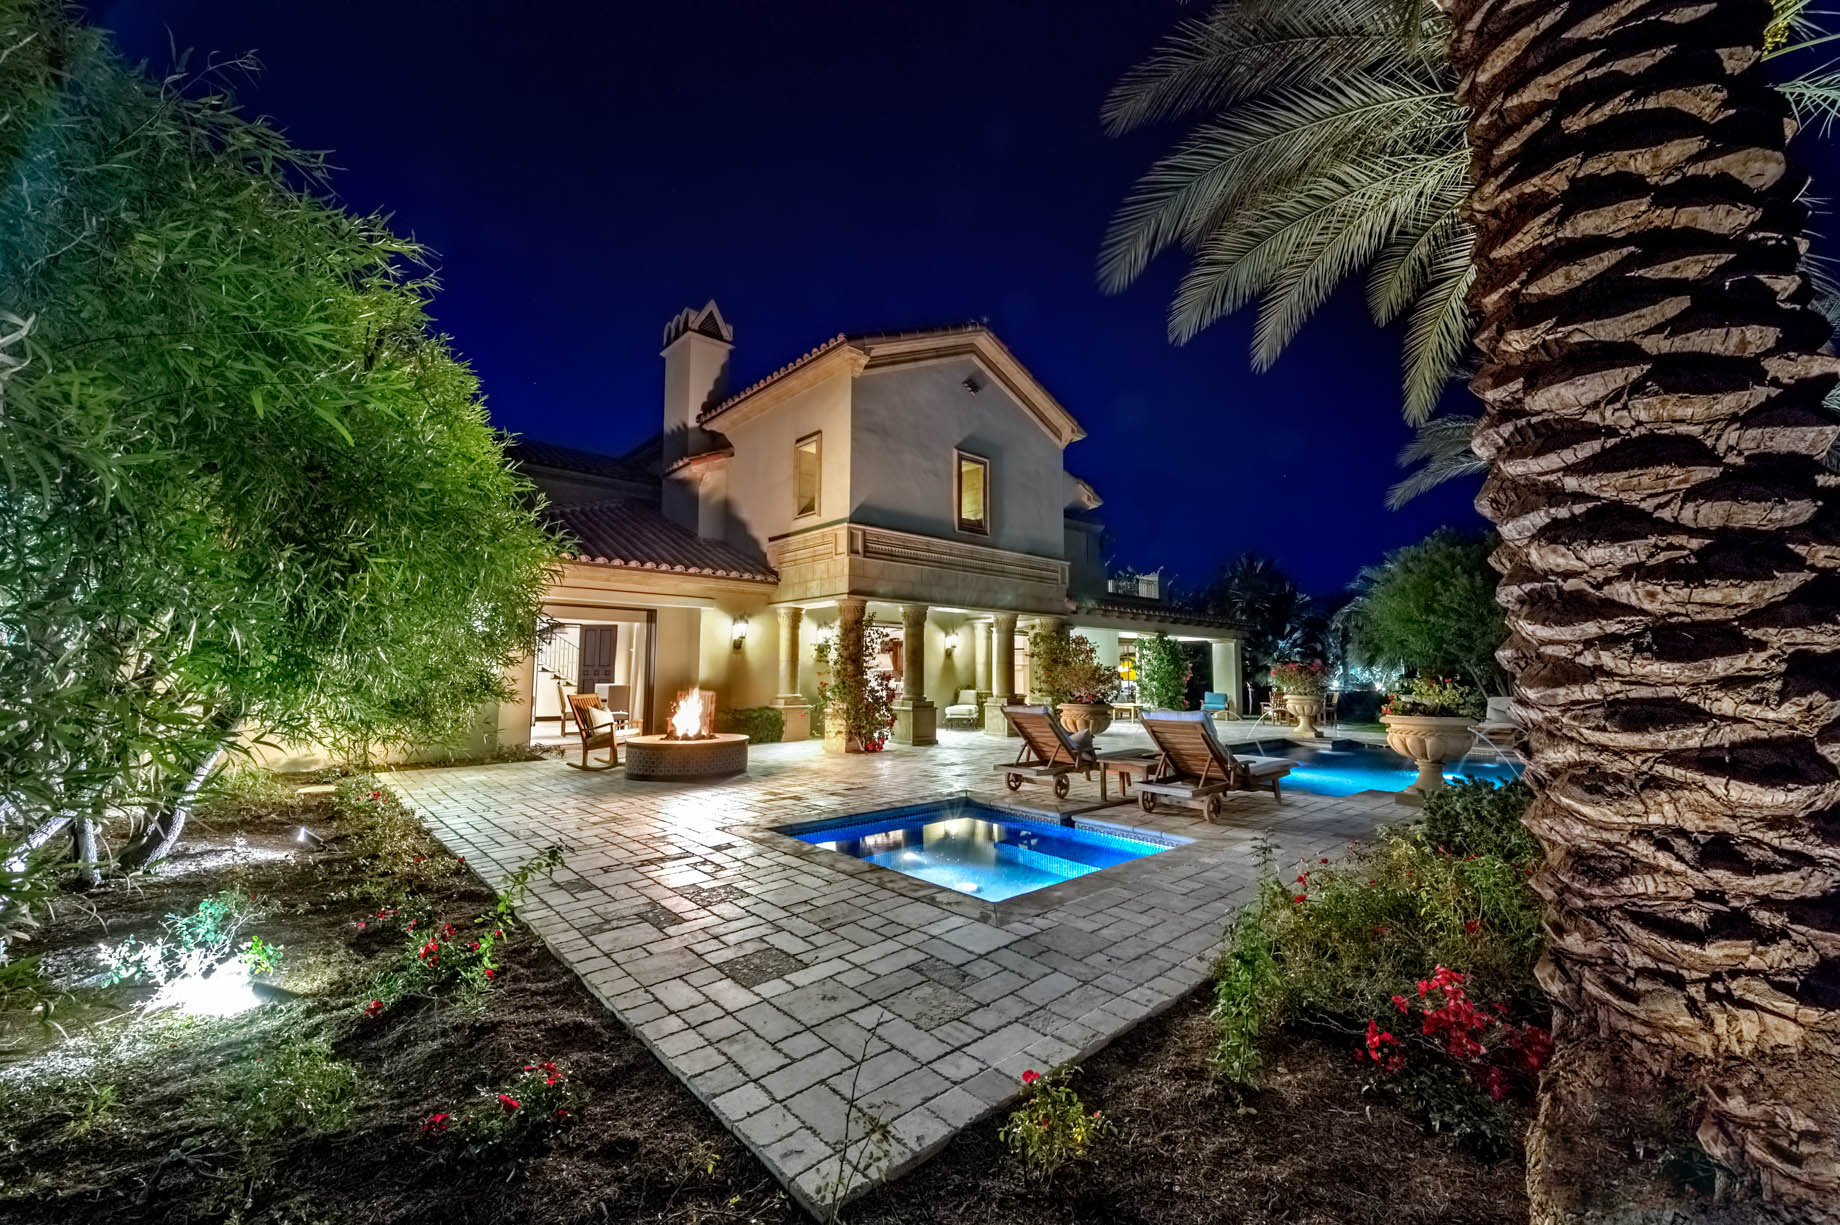 Sylvester Stallone Residence – Humboldt Blvd, La Quinta, CA, USA